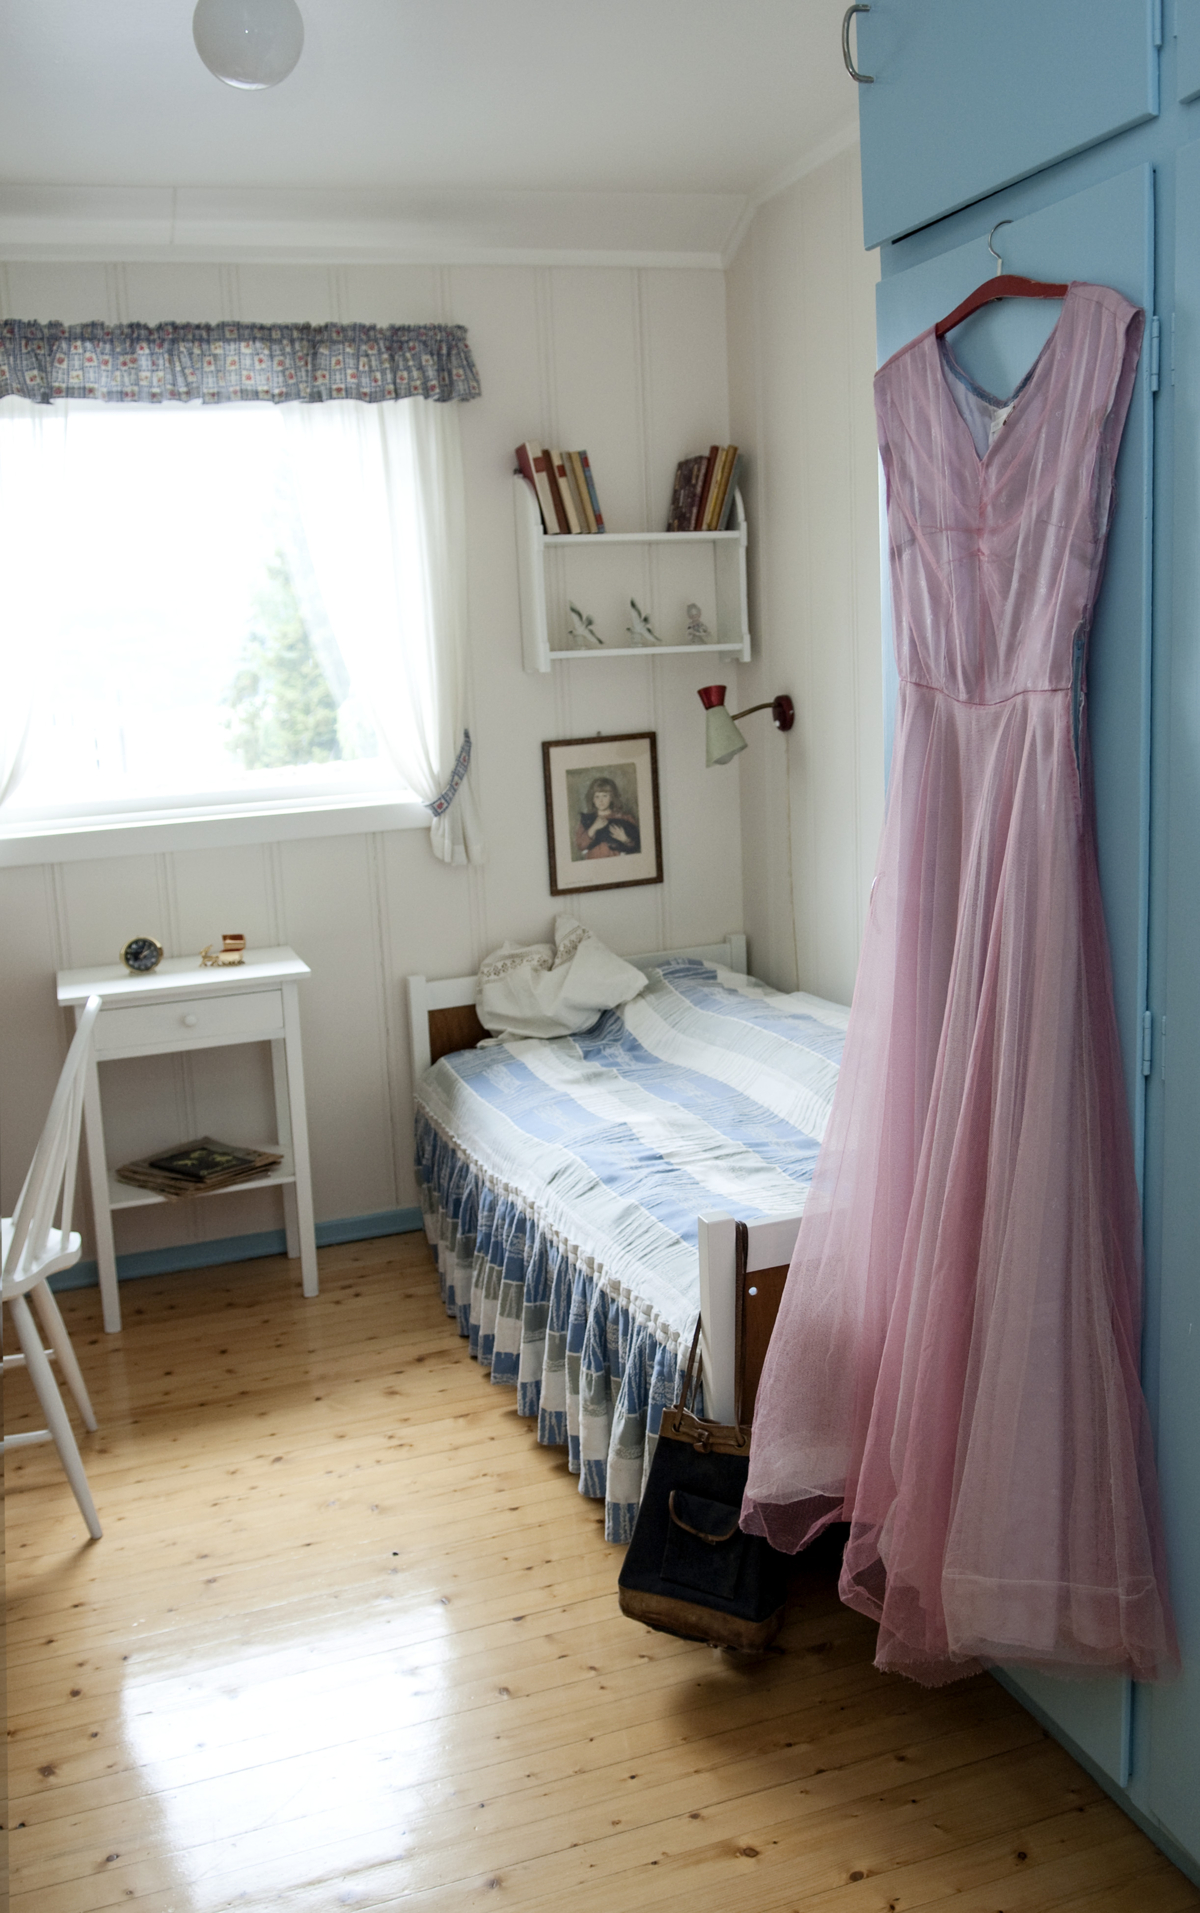 Sovev&aelig;relset til datteren i 1950-tallshuset. Foto: Camilla Damg&aring;rd / Maihaugen

